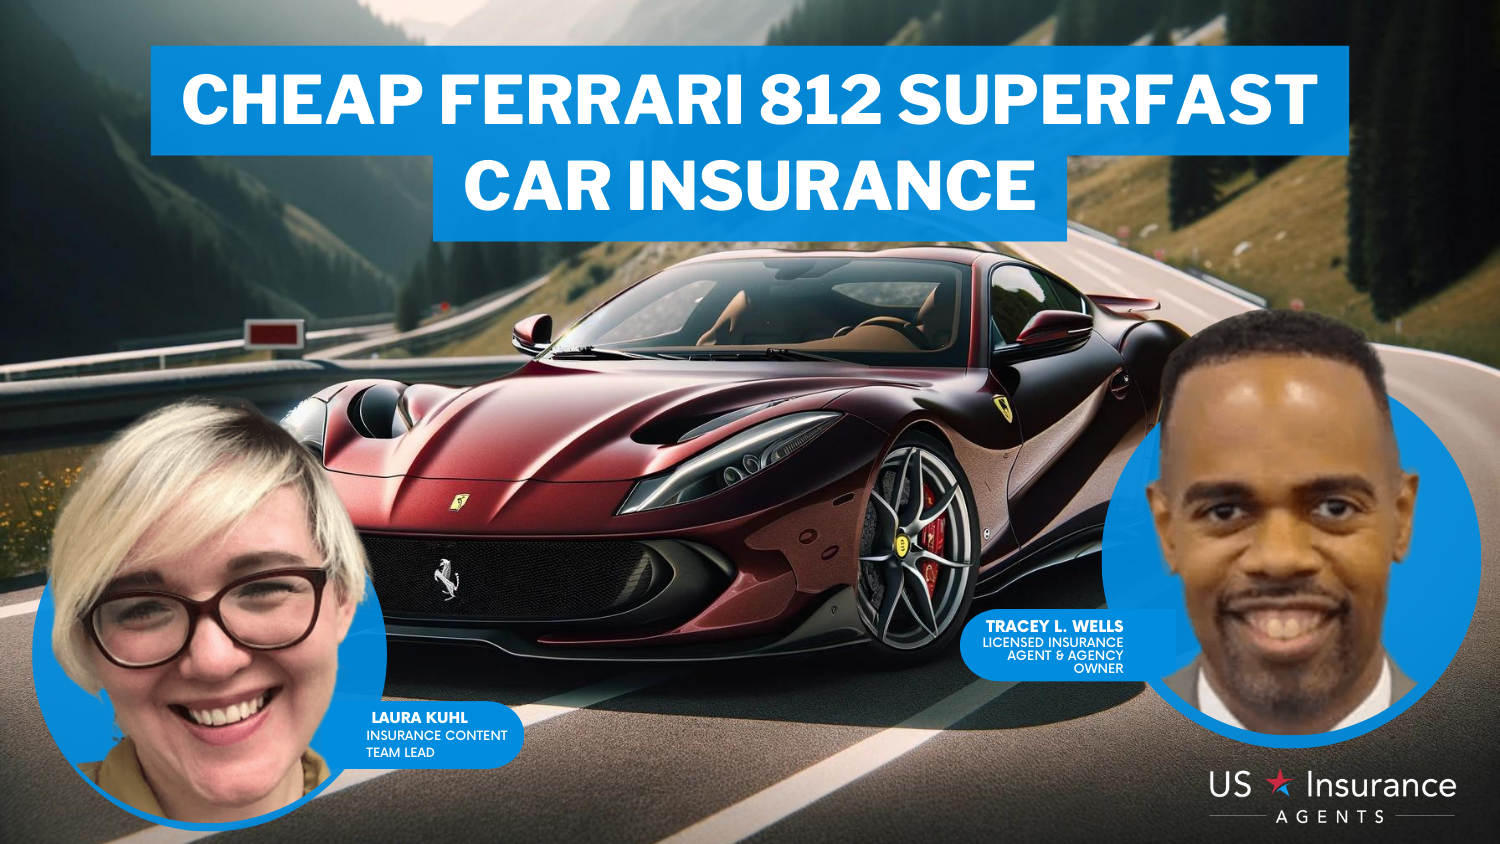 Cheap Ferrari 812 Superfast Car Insurance: AIG, Nationwide, and Travelers